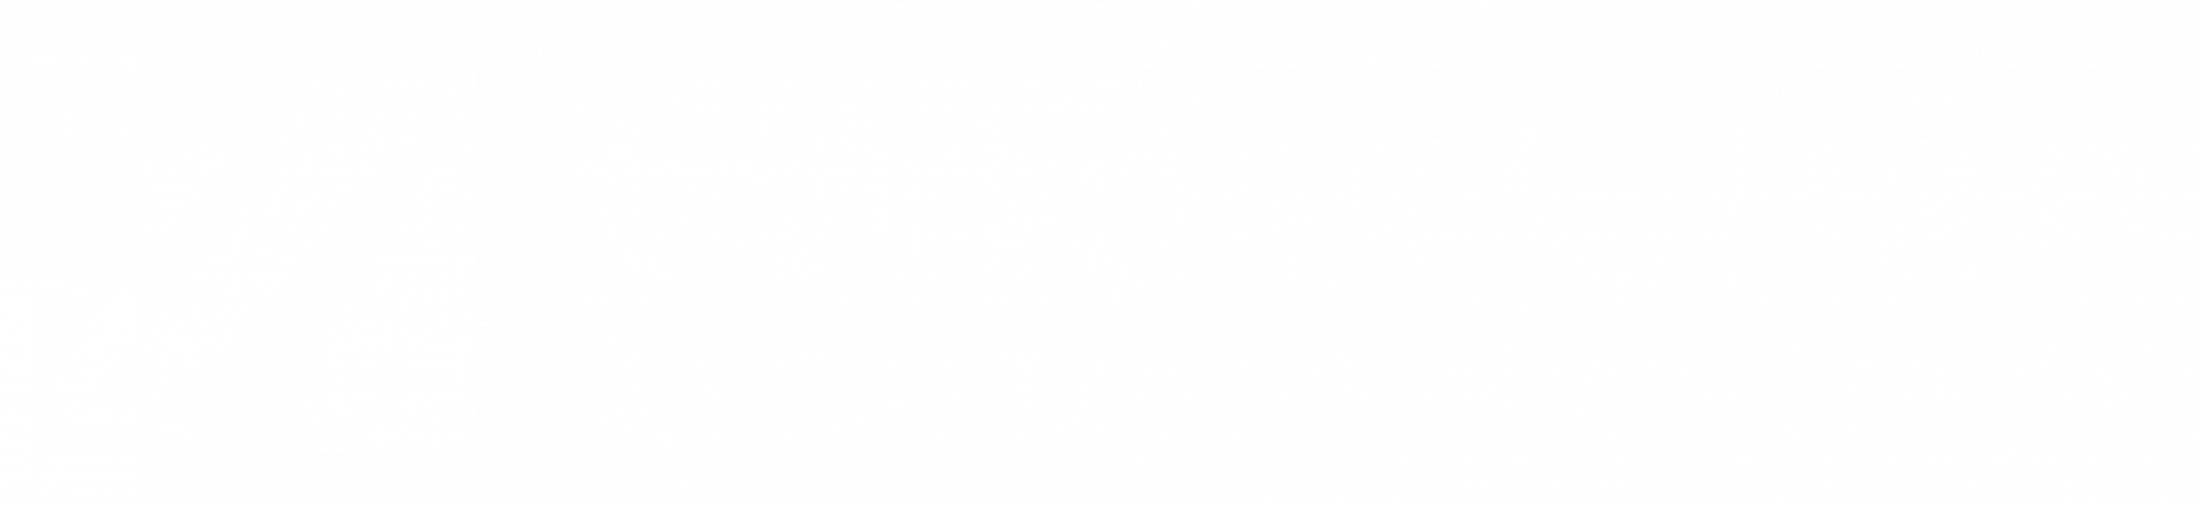 UMass Chan Medical School Logo